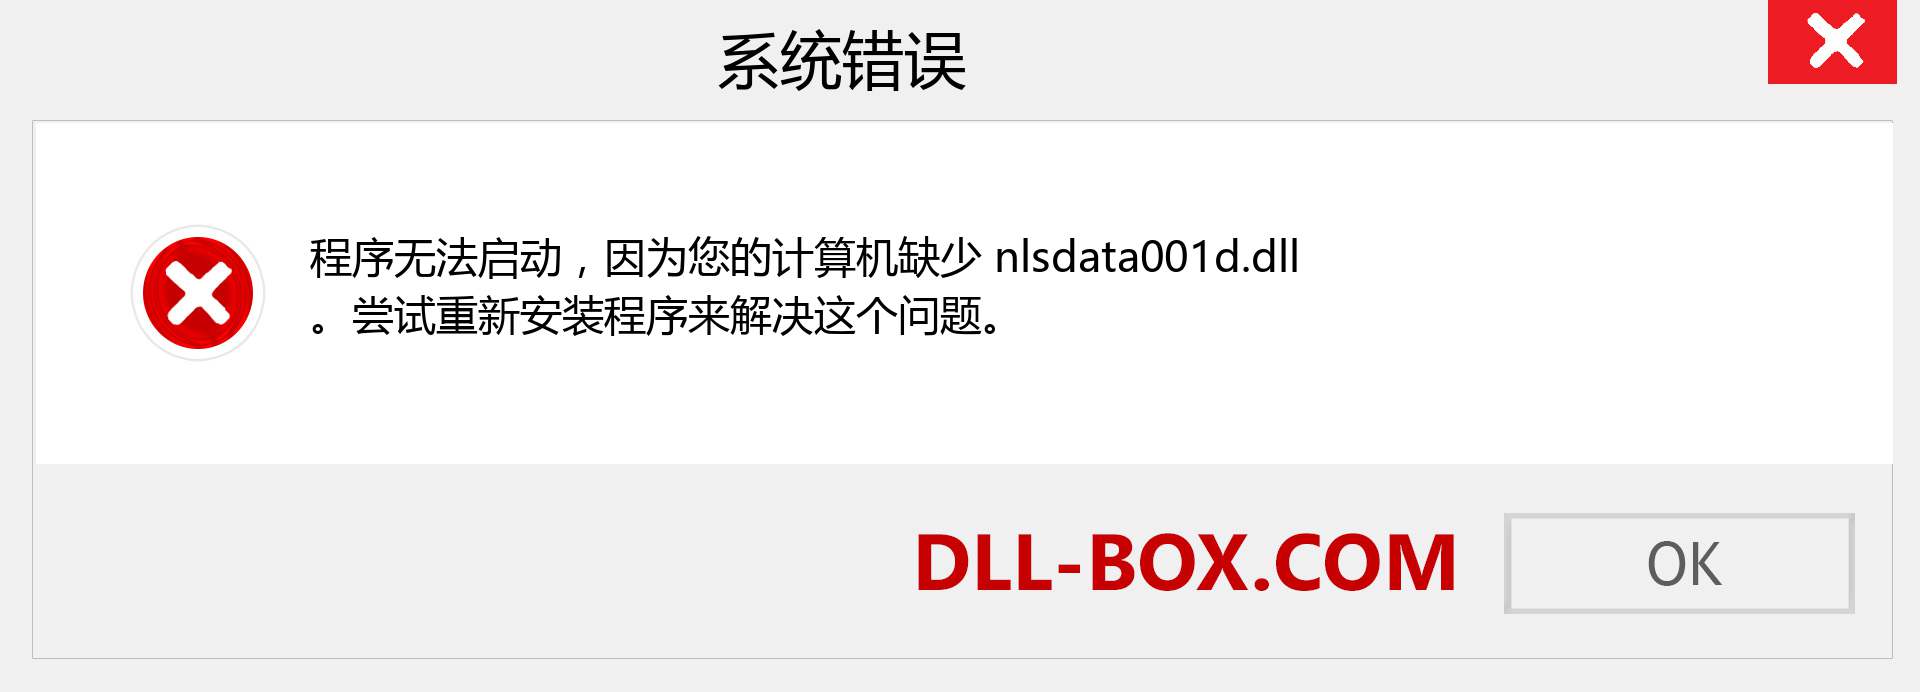 nlsdata001d.dll 文件丢失？。 适用于 Windows 7、8、10 的下载 - 修复 Windows、照片、图像上的 nlsdata001d dll 丢失错误